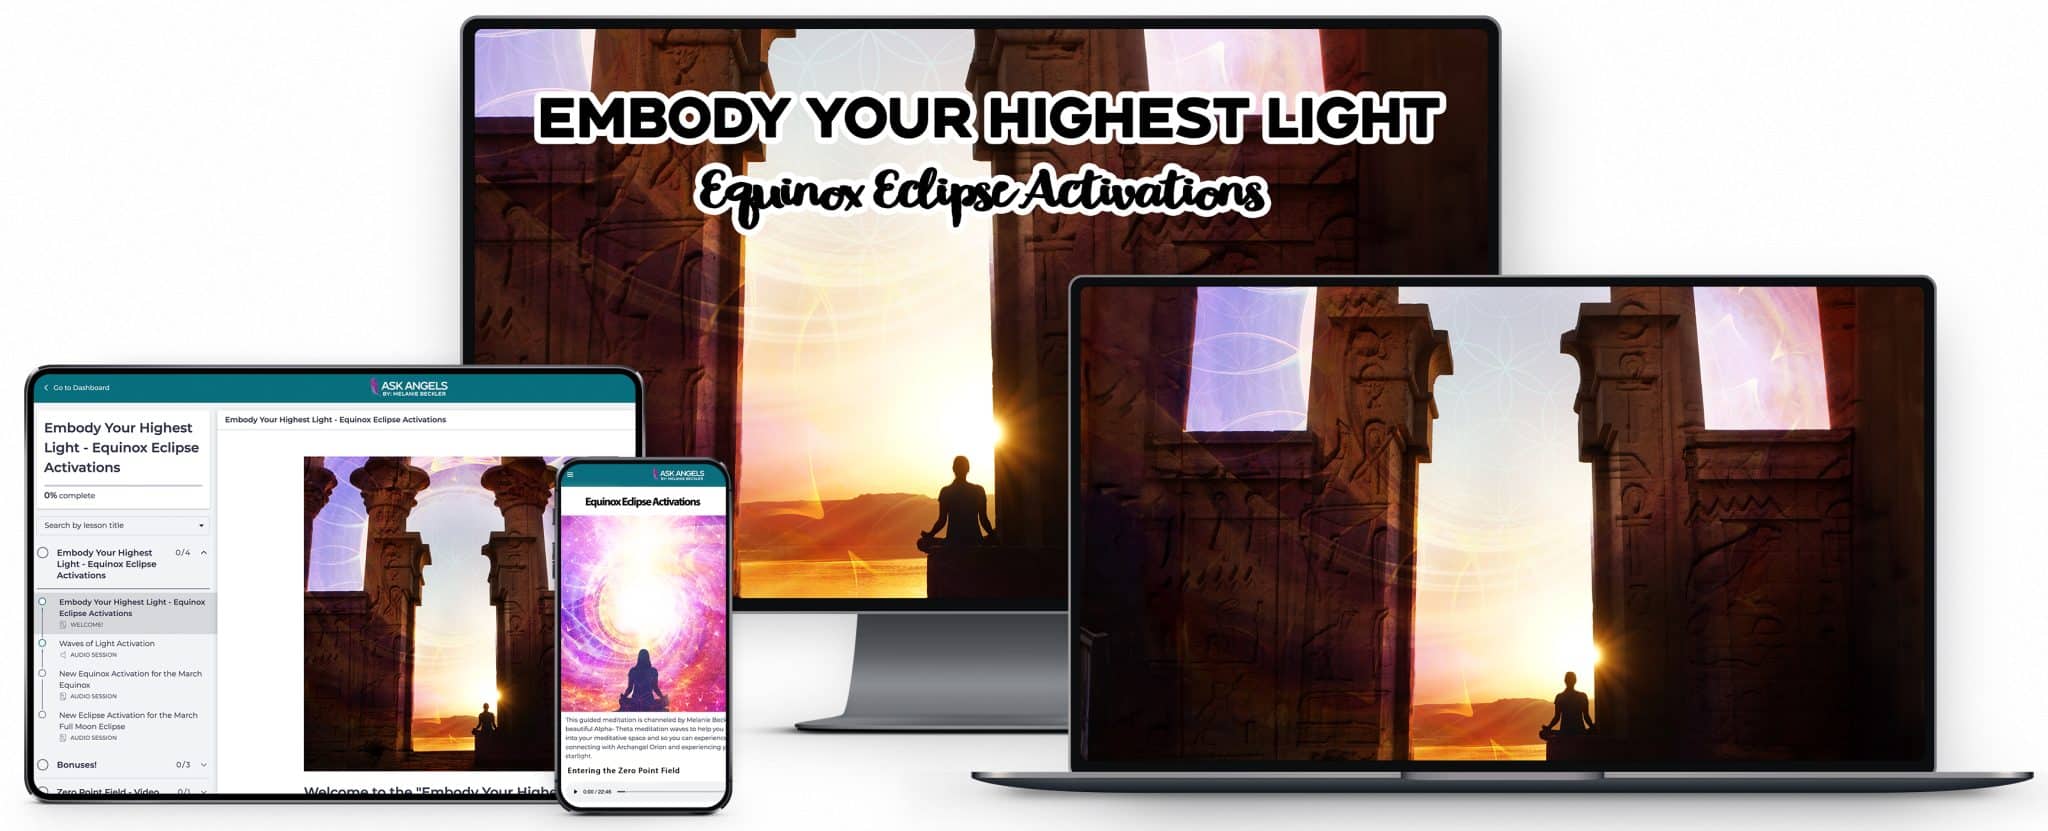 Embody Your Highest Light - Equinox Eclipse Activations